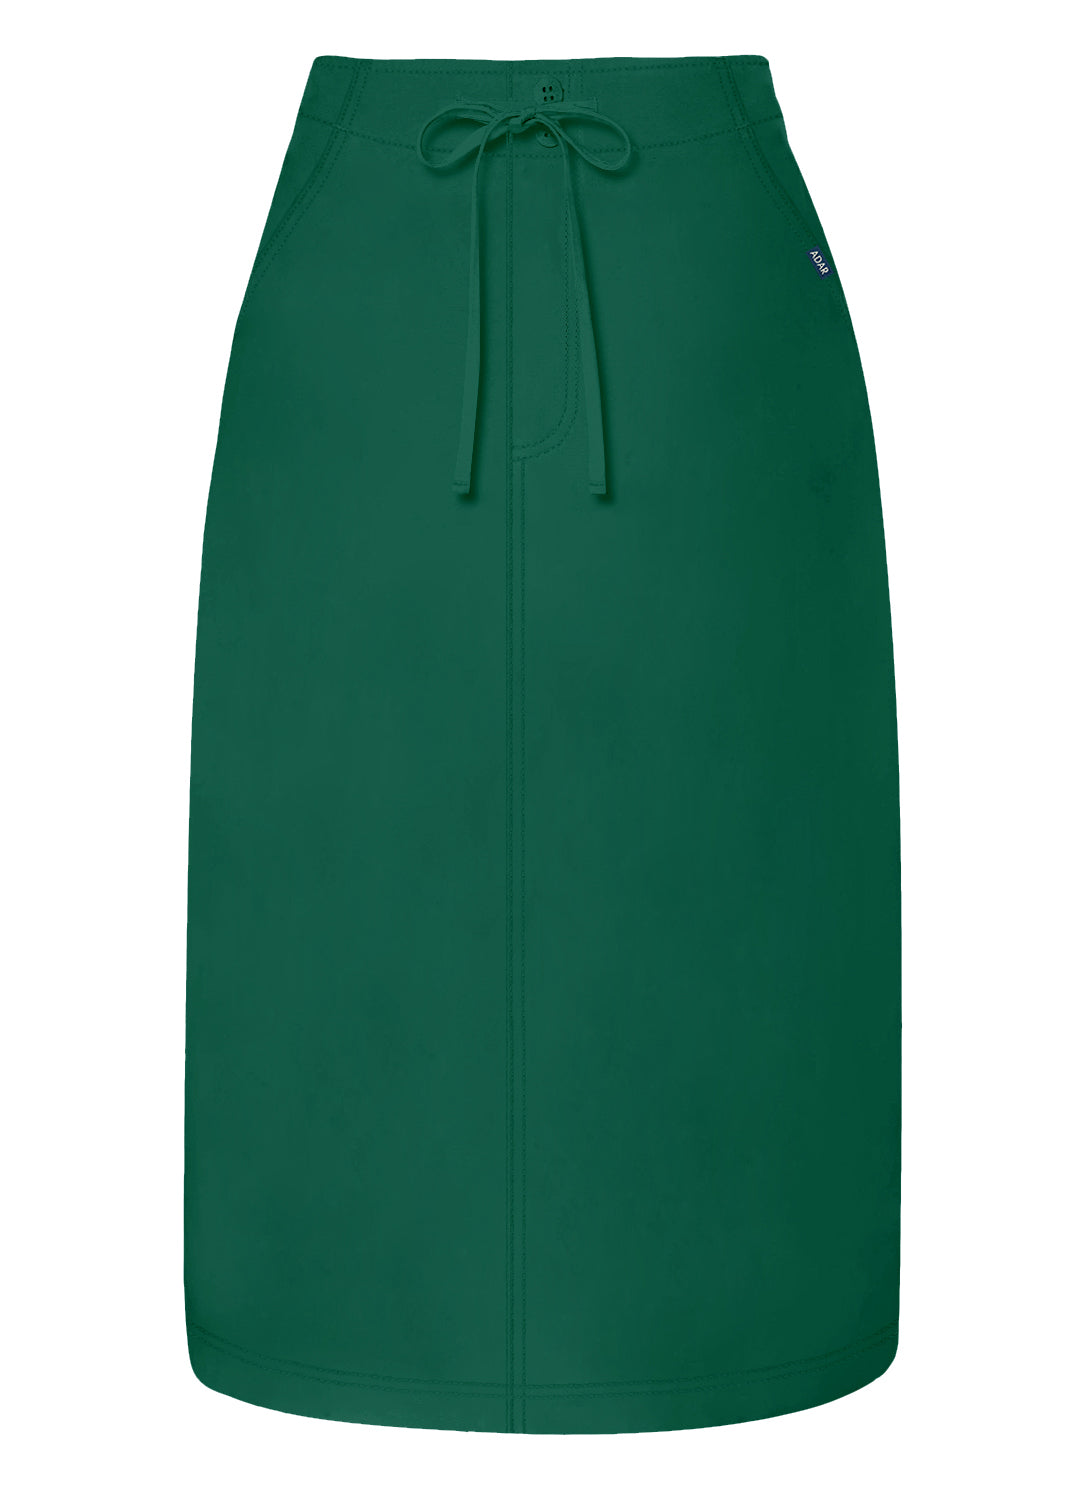 Adar Universal Mid-Calf Length Drawstring Skirt